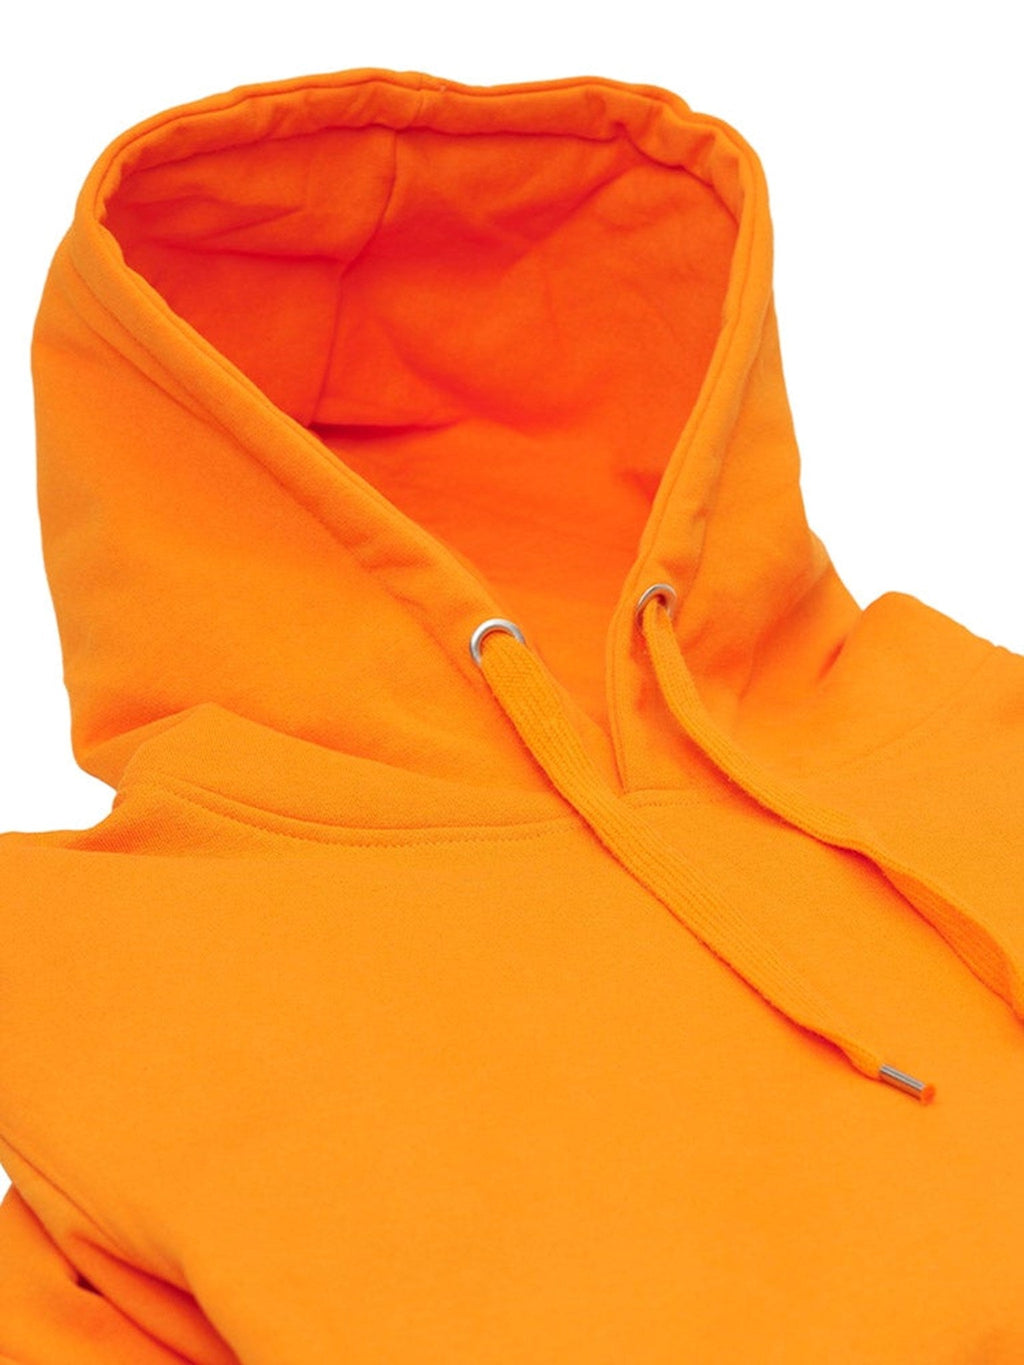 Dečko hoodie - naranča